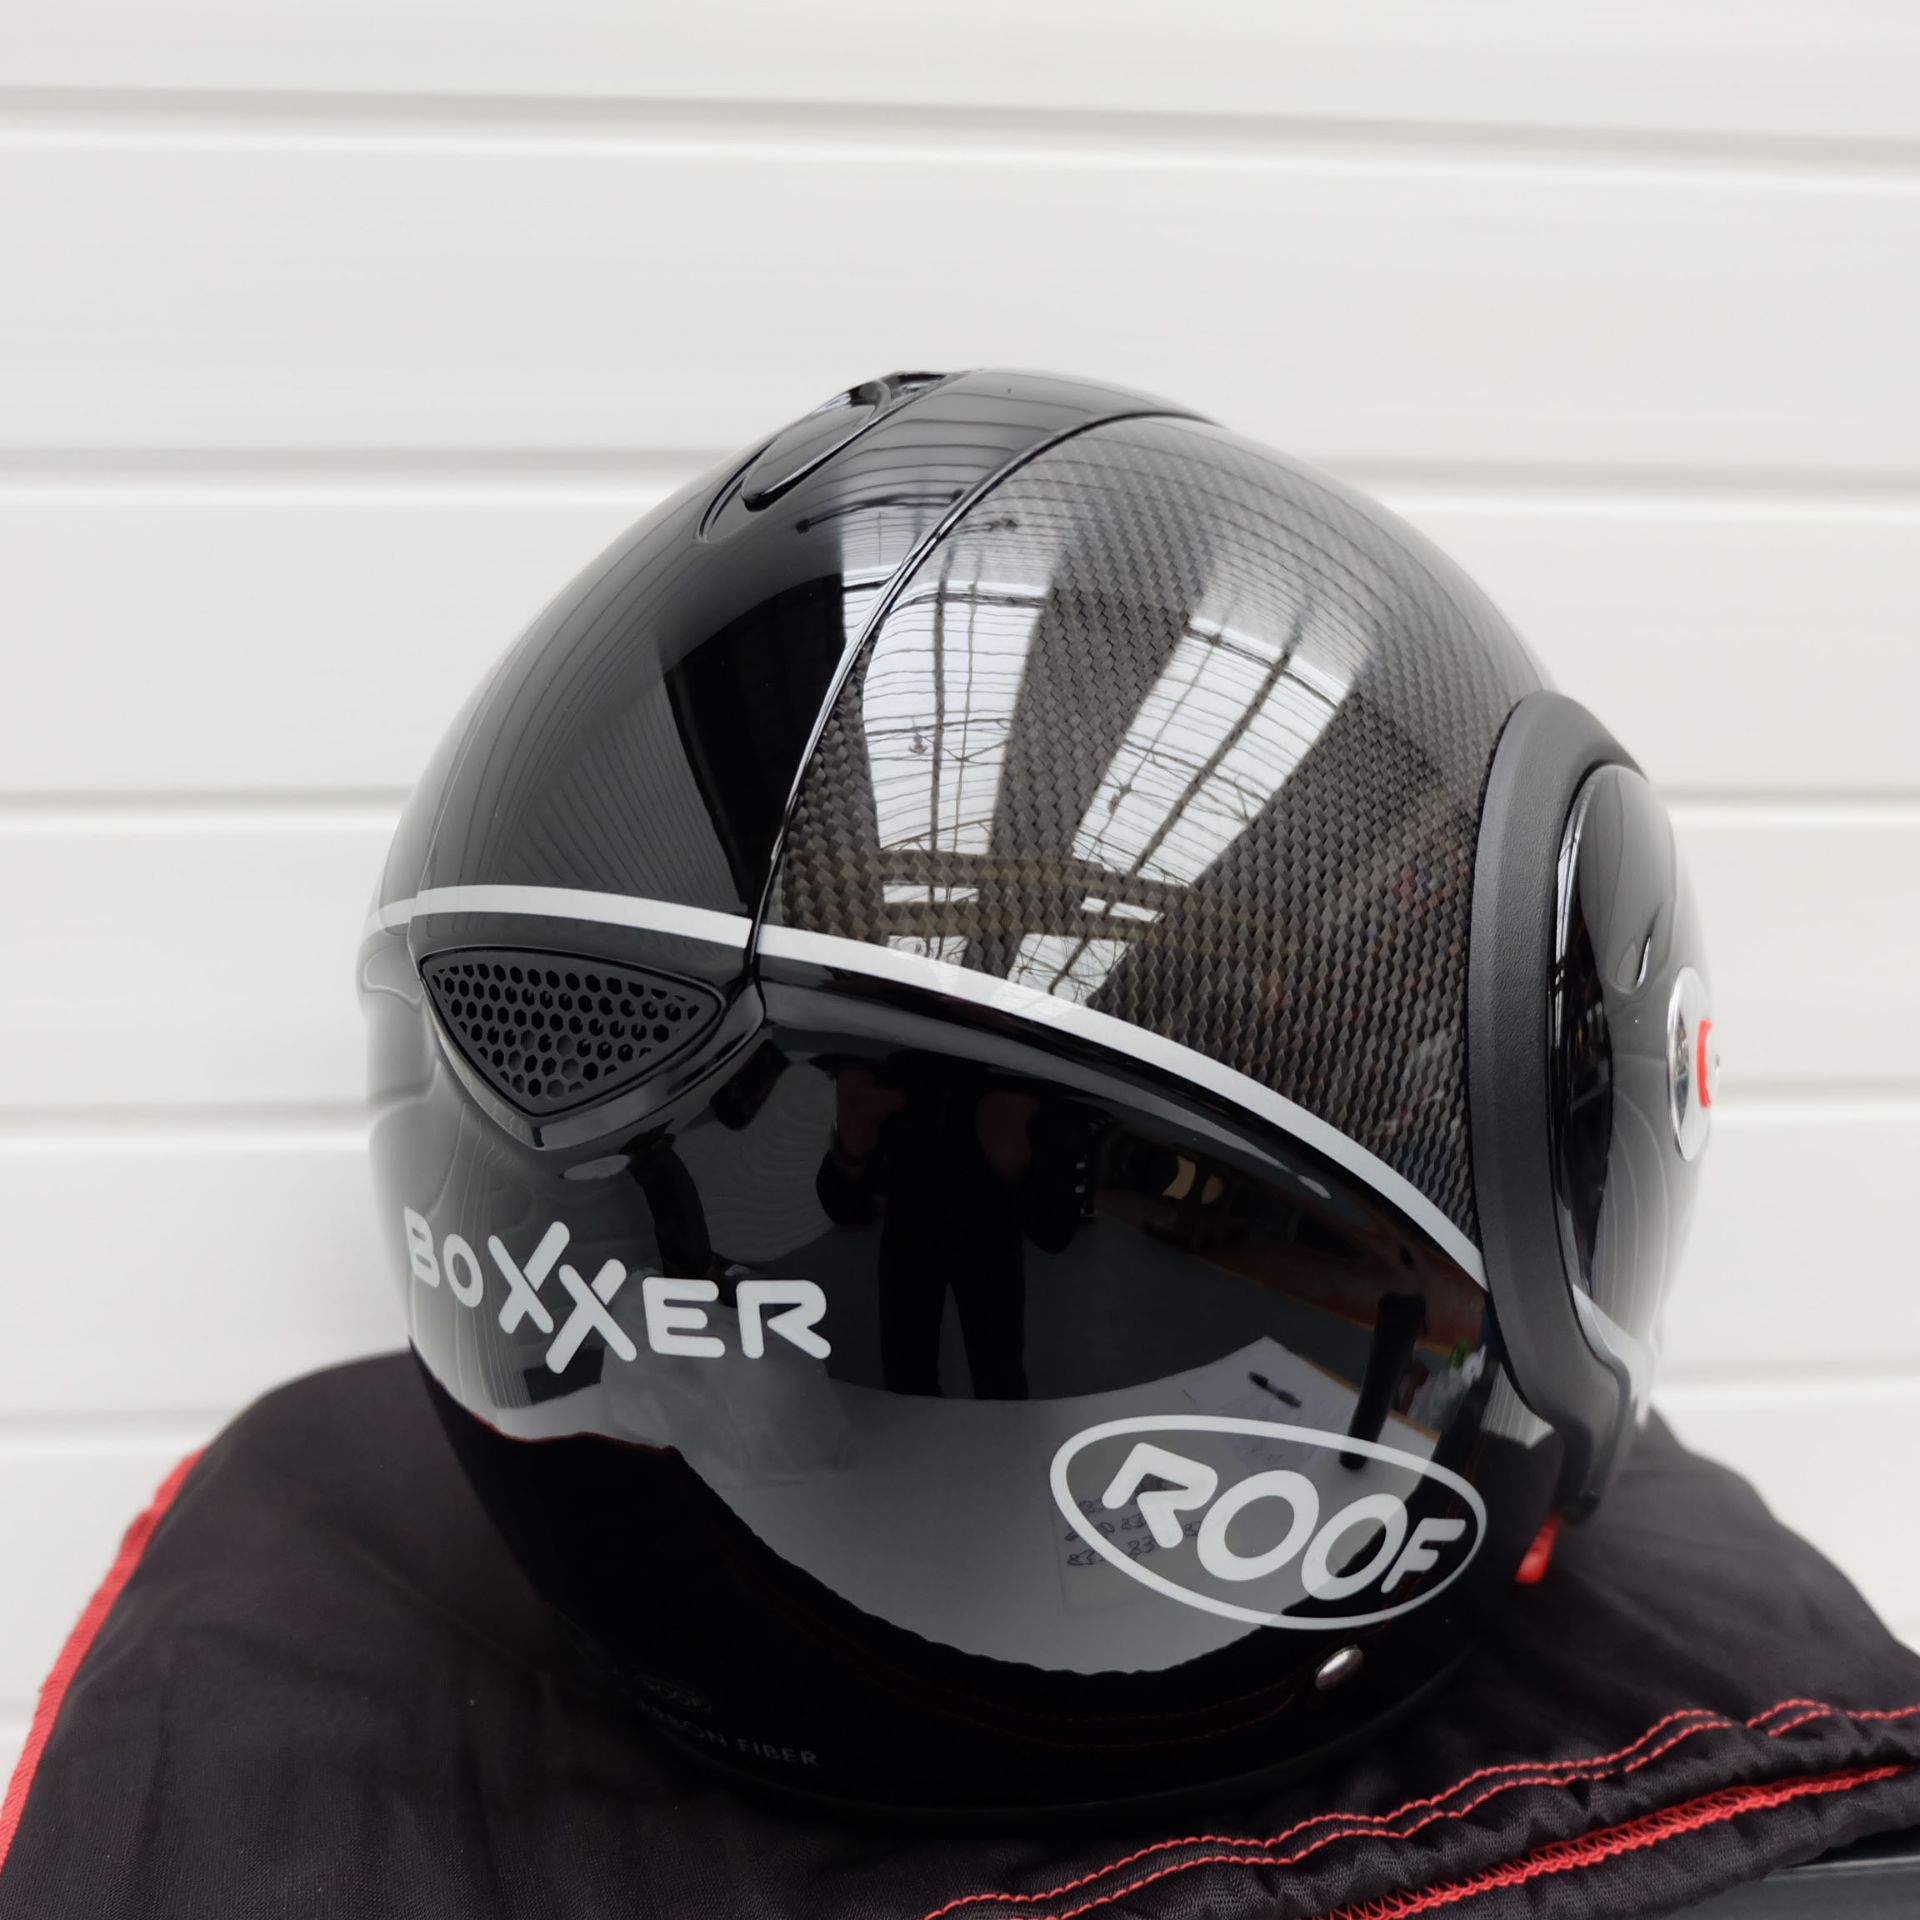 Roof Boxxer Carbon Flip Up Helmet Black SMALL+ BOXER V8 XL - Image 4 of 13